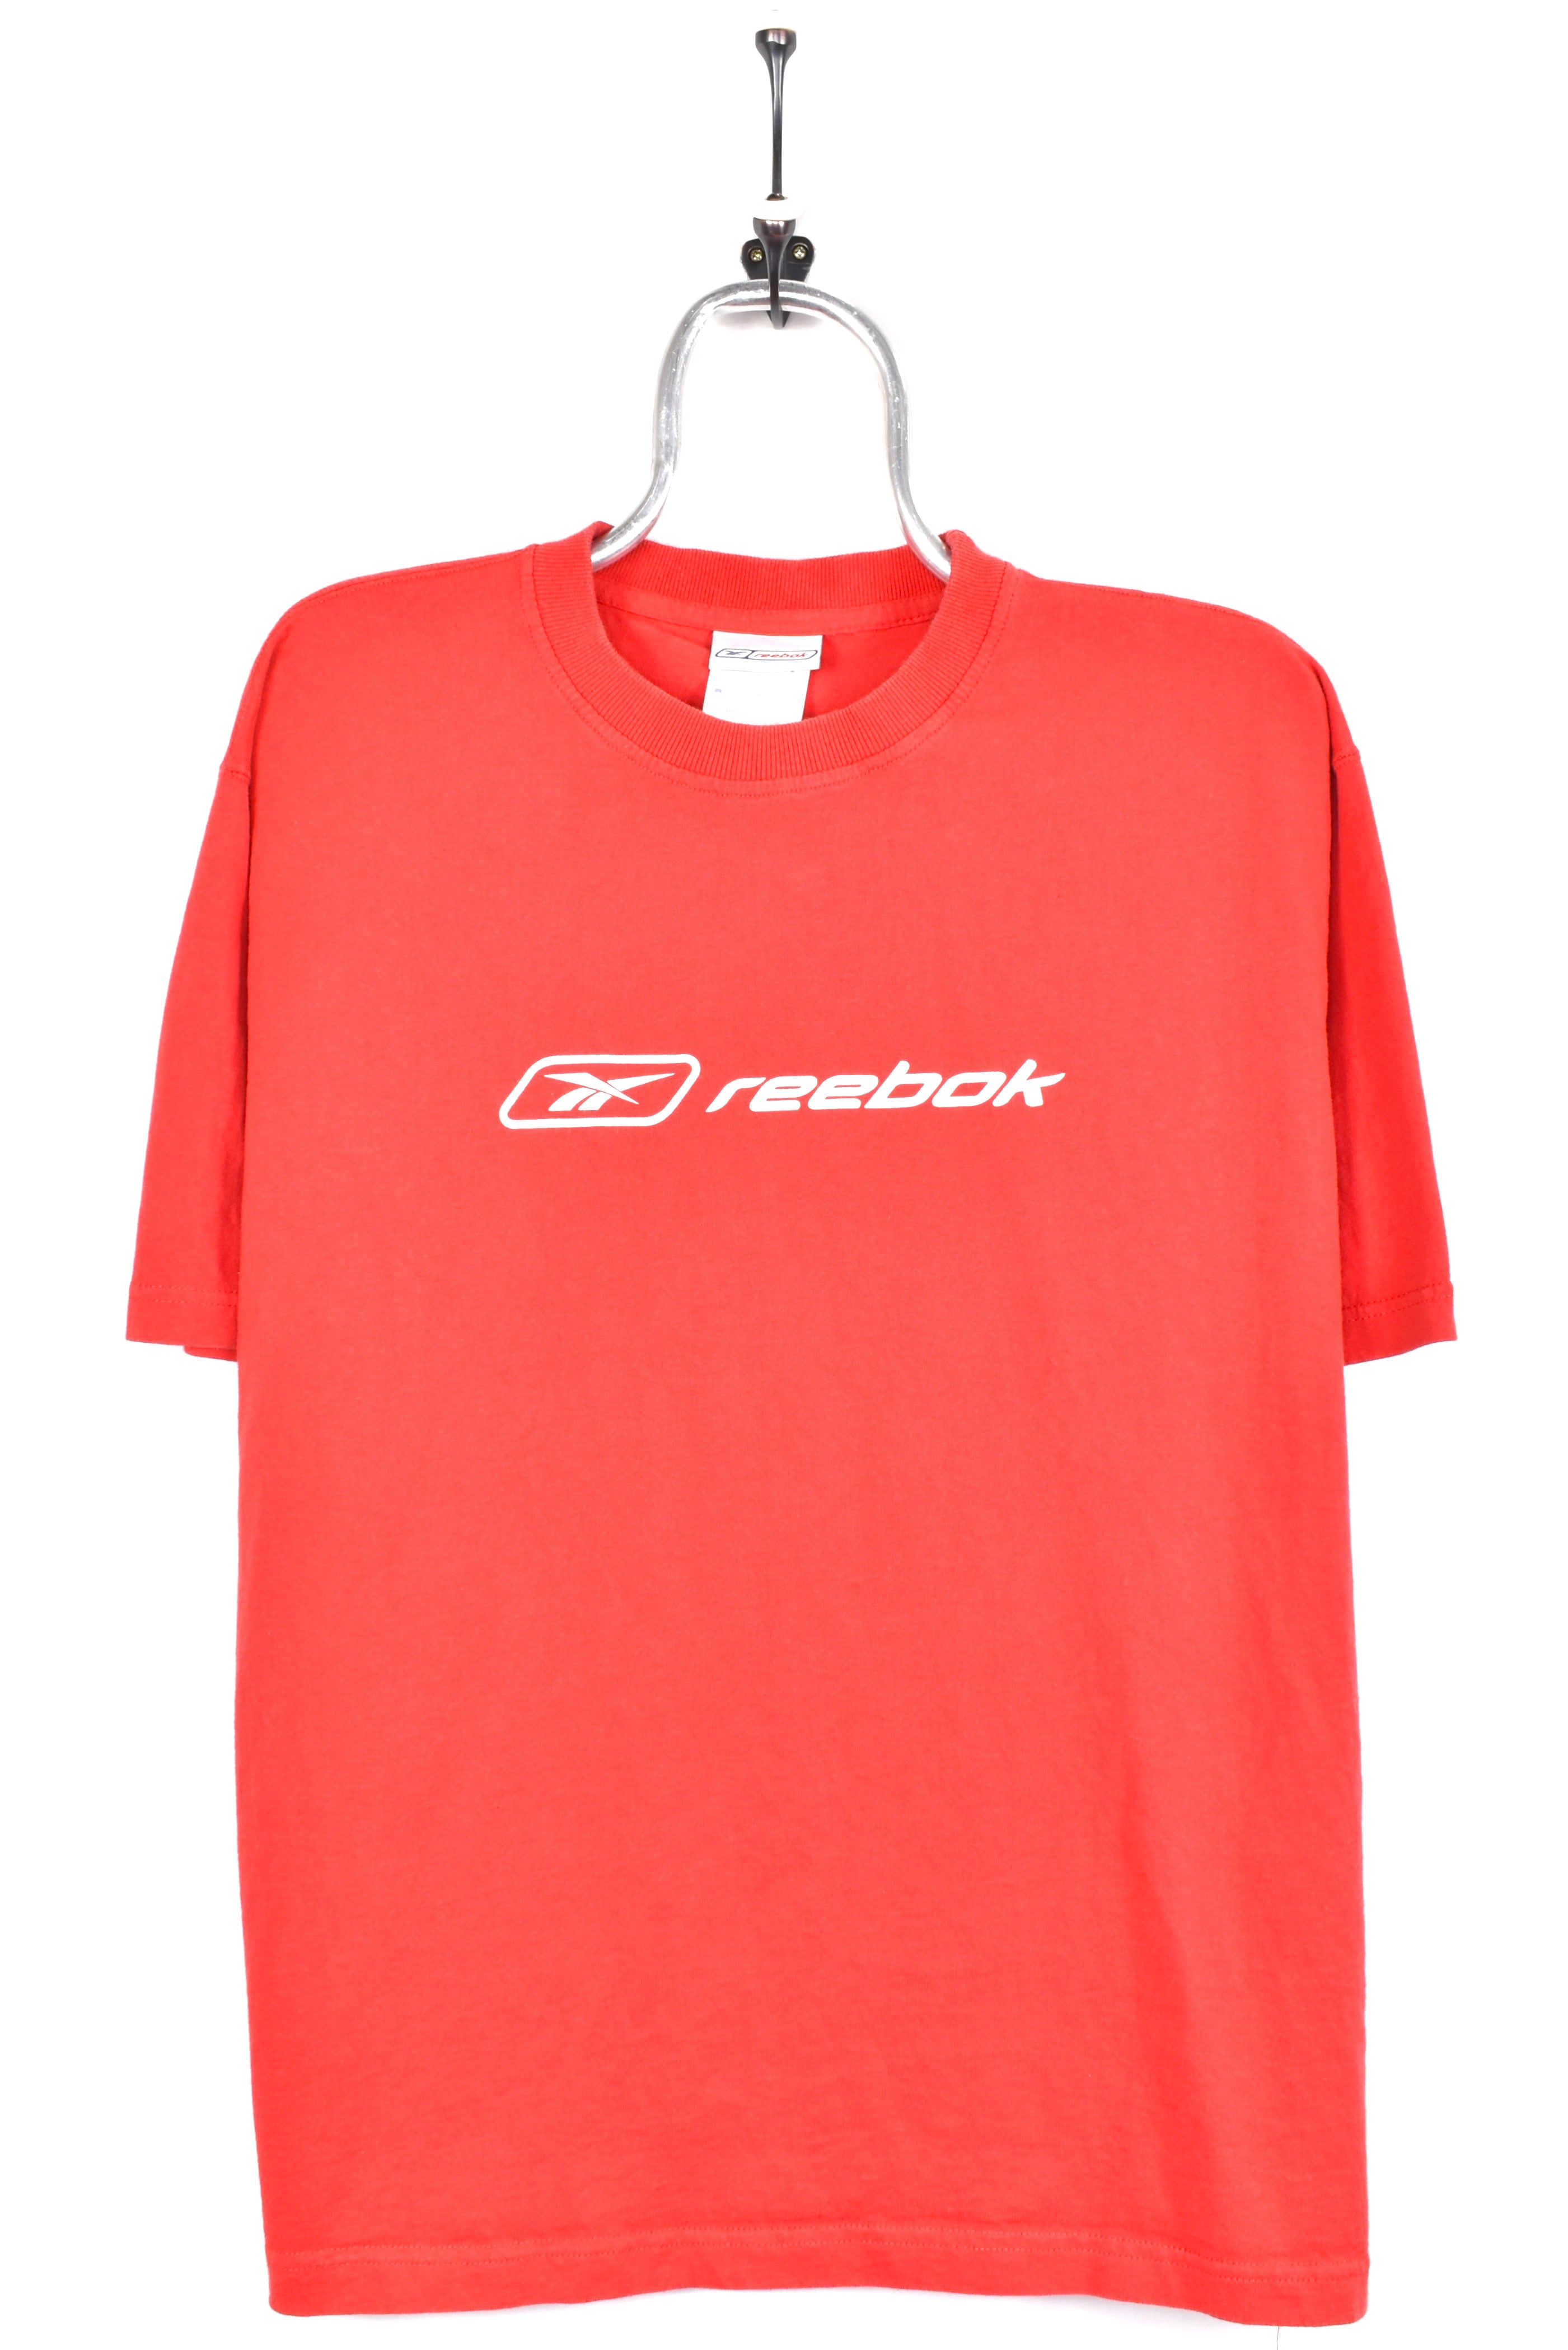 Vintage Reebok shirt, red graphic tee - AU L REEBOK